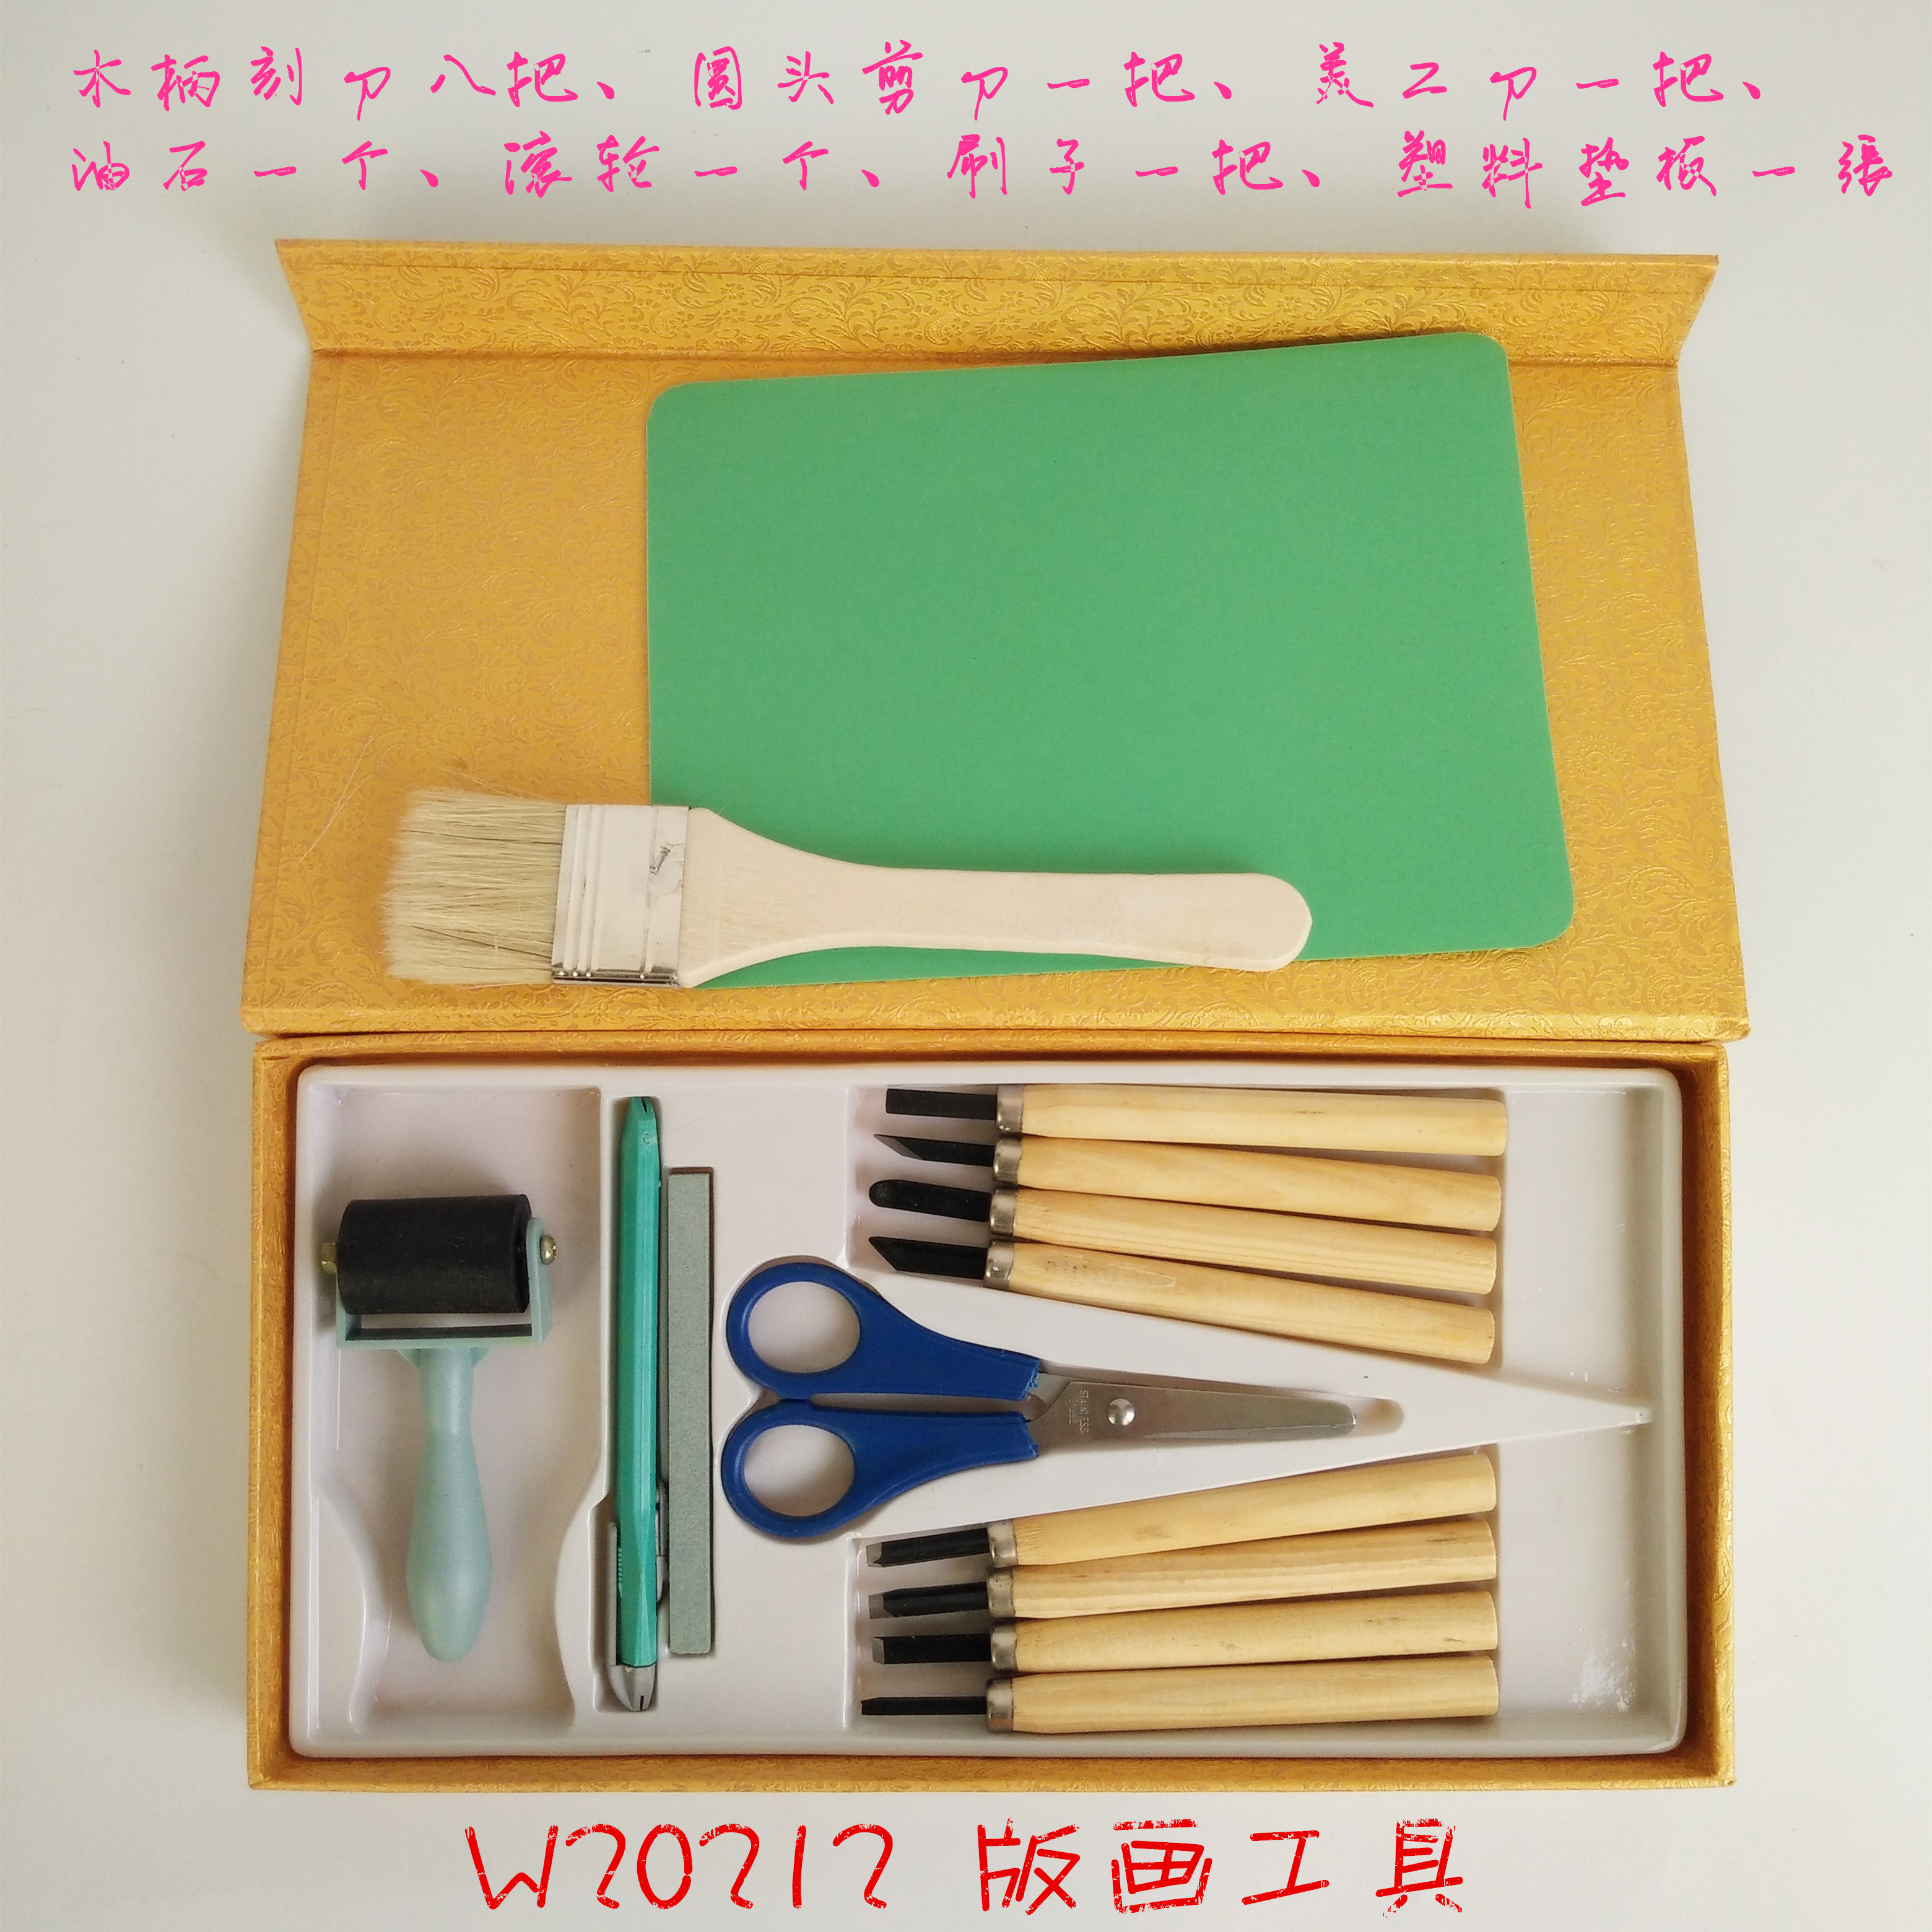 W20212 版画工具小学初中美术教学仪器教育配送学校达标验收套装